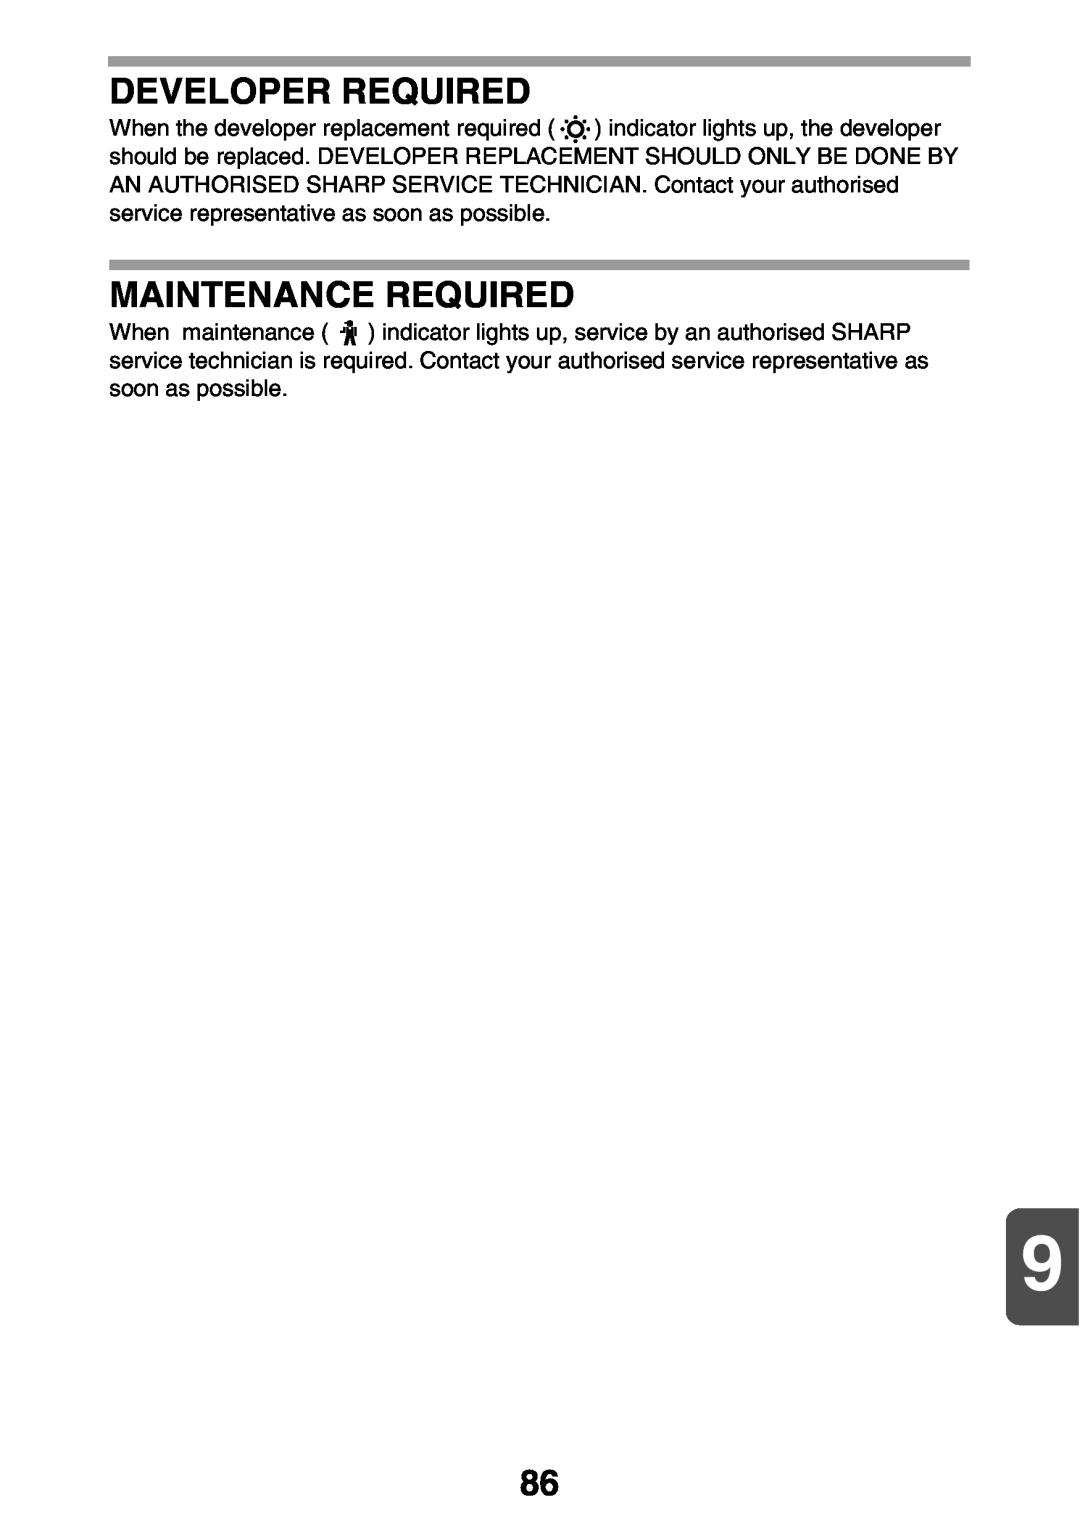 Sharp MX-B200 manual Developer Required, Maintenance Required 